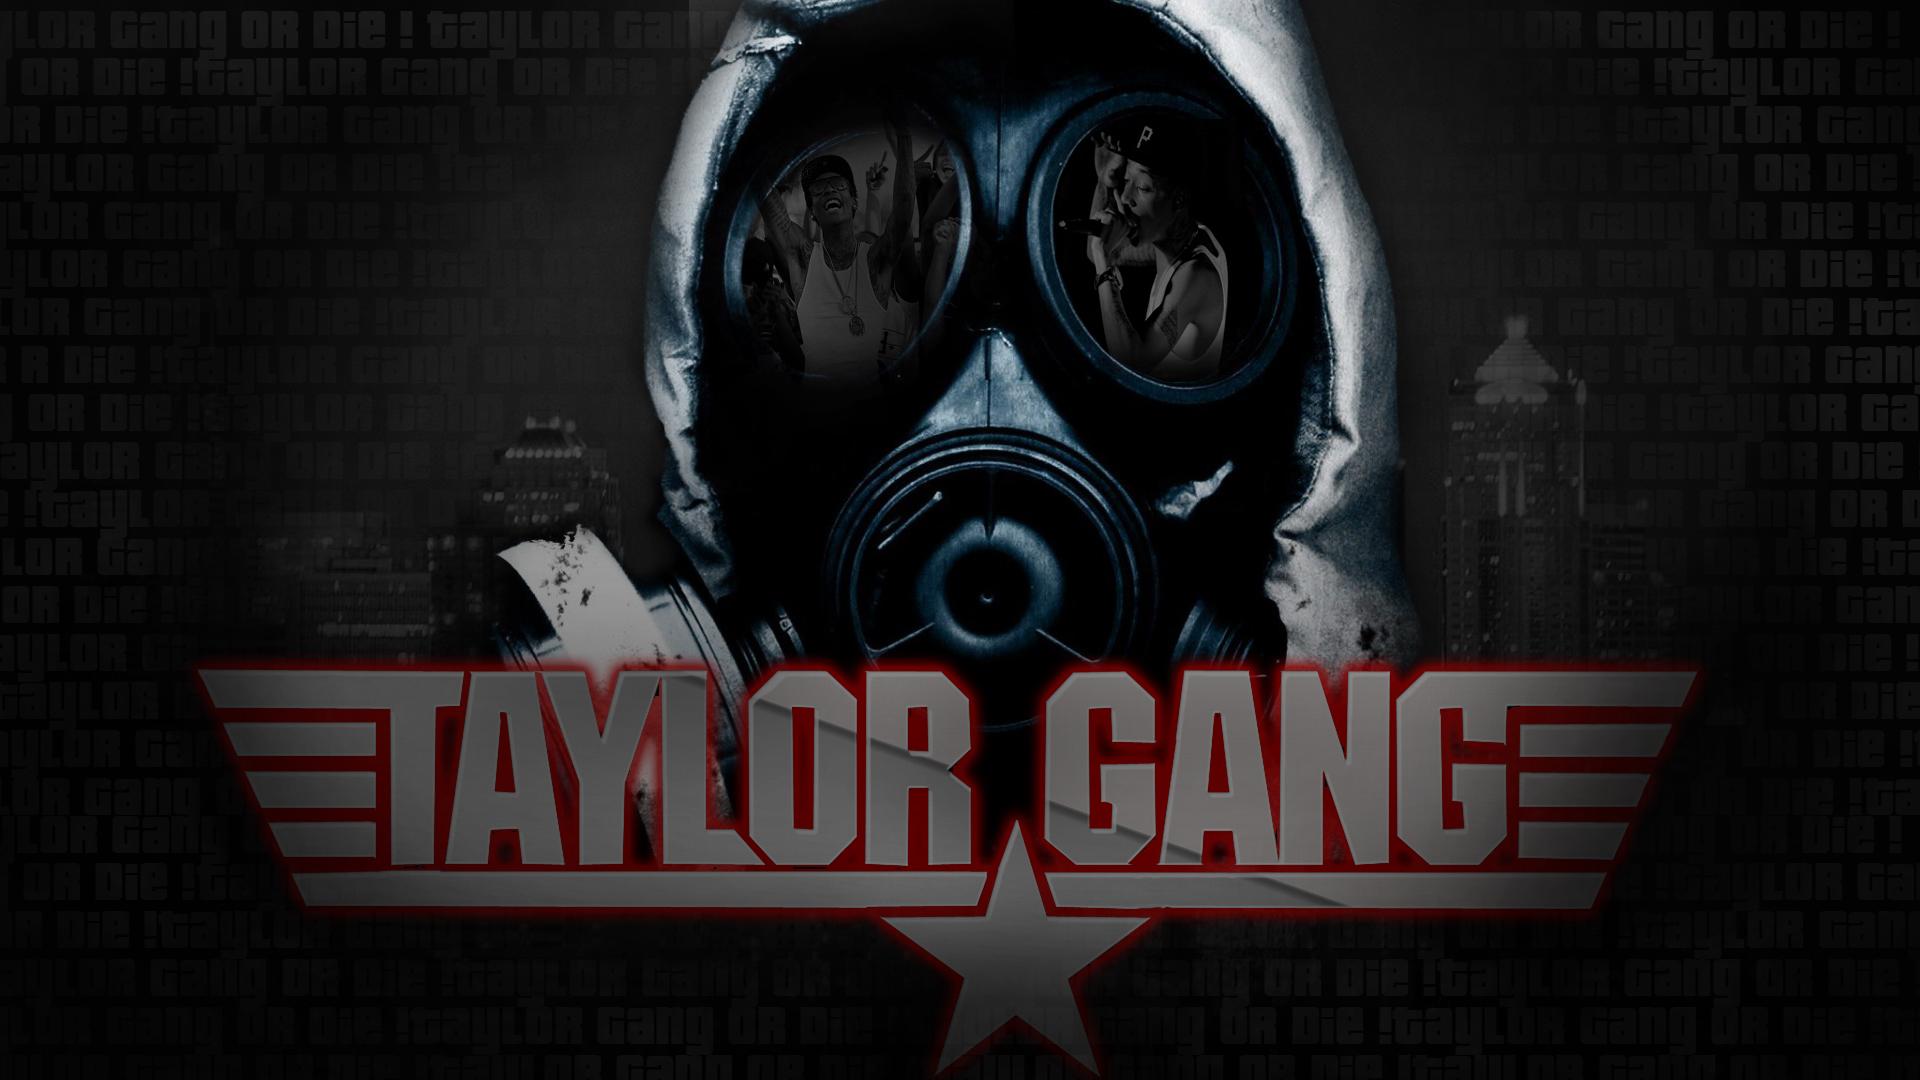 44+ Taylor Gang Wallpaper Background on WallpaperSafari